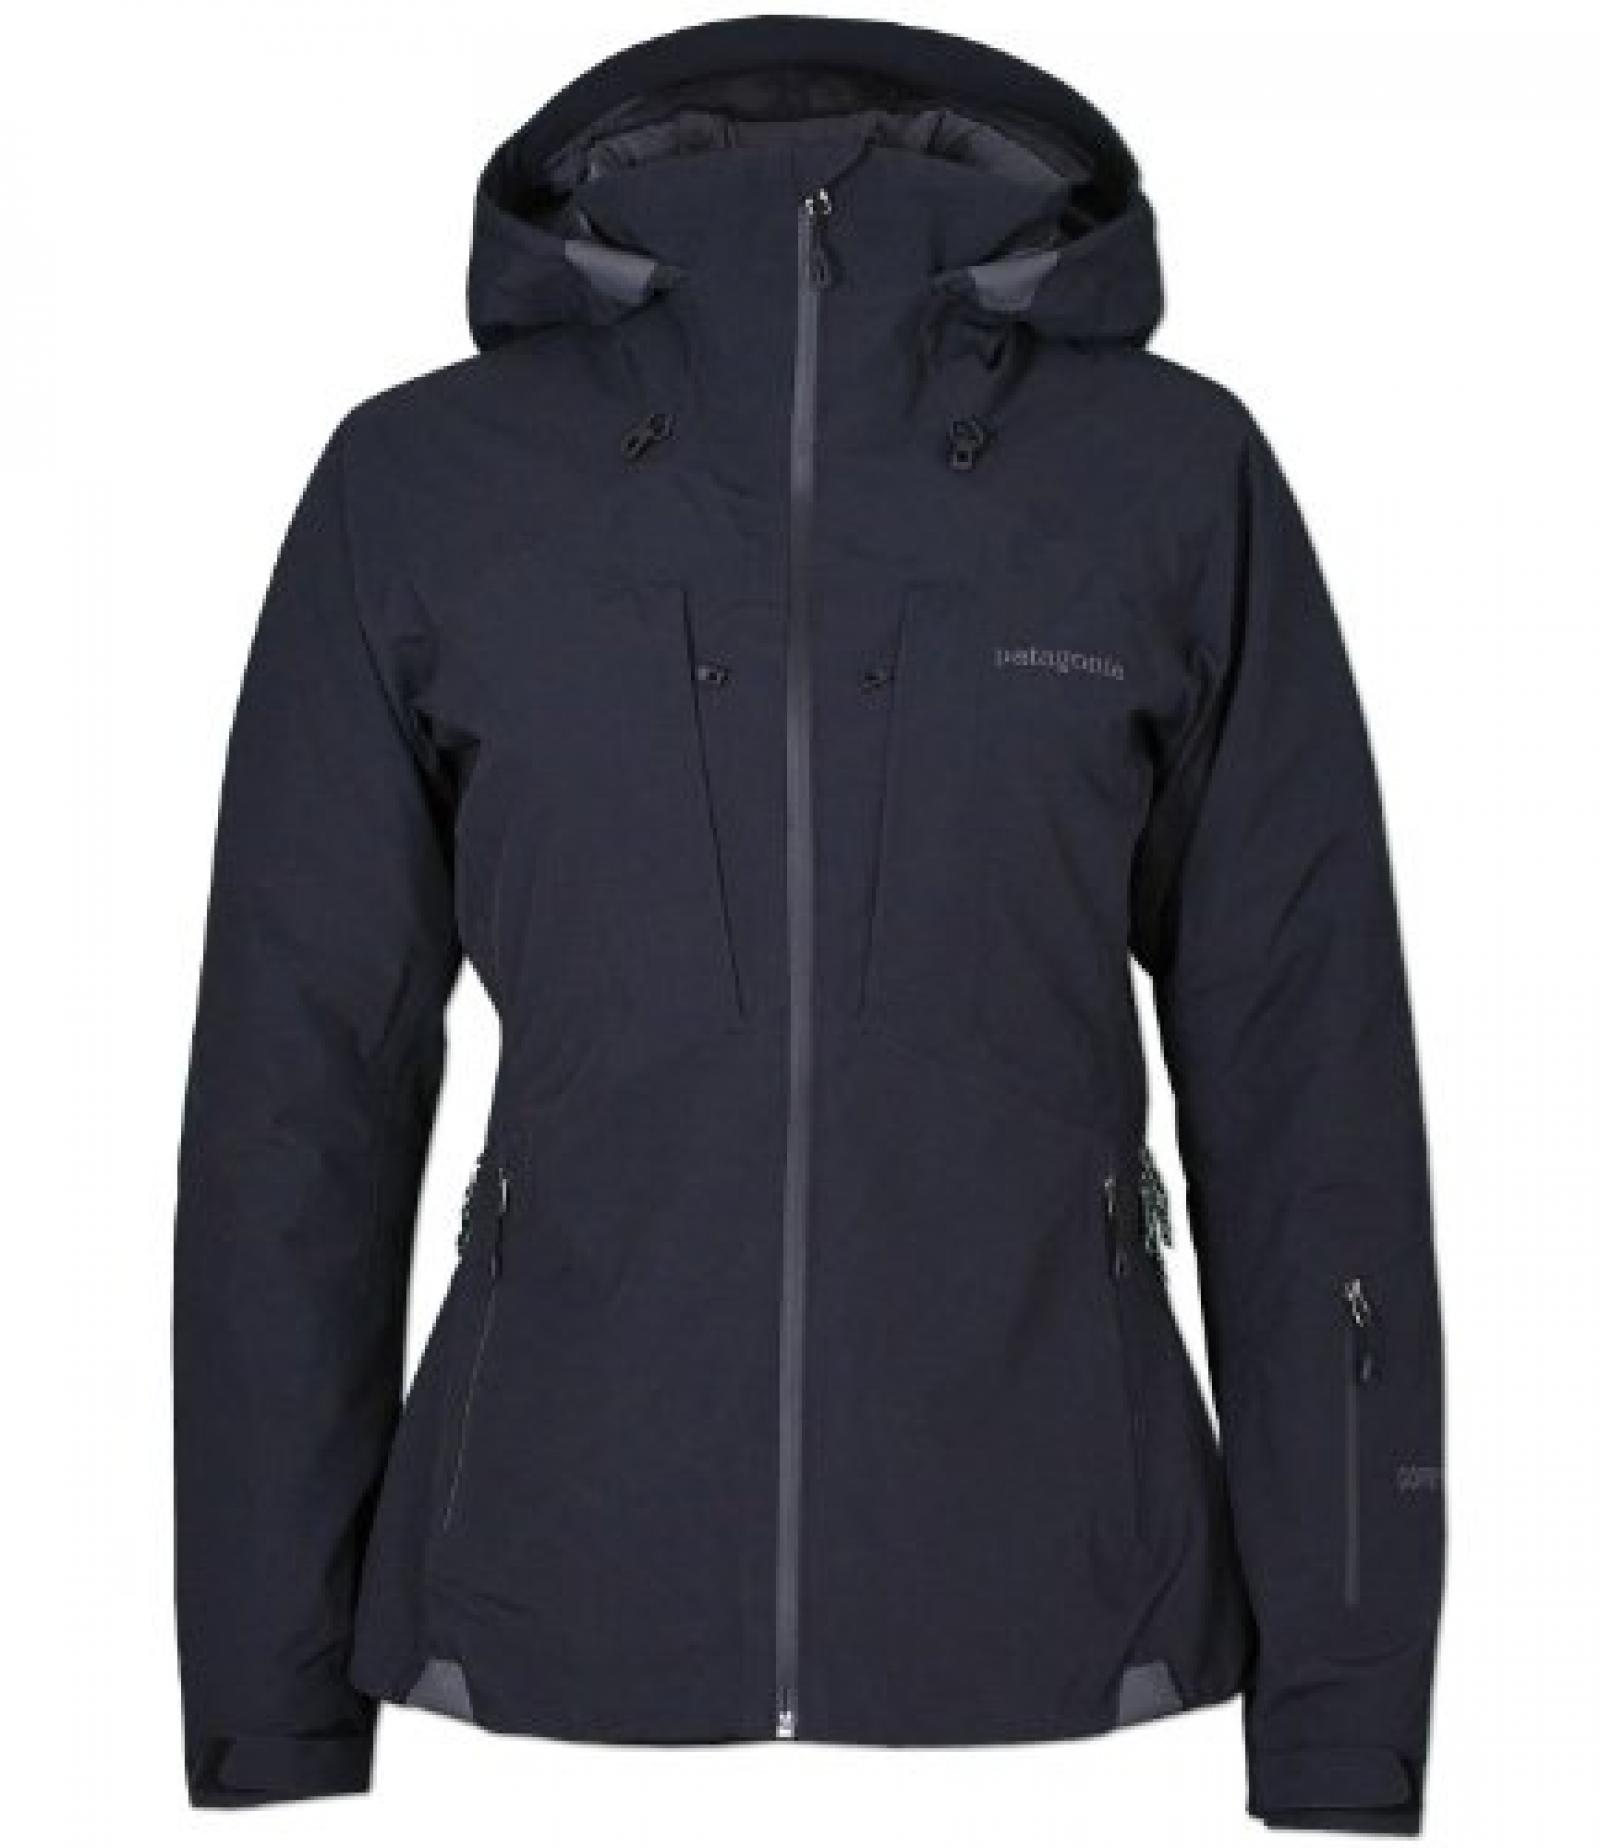 Patagonia Damen Skijacke Wintersportjacke GORE-TEX® WS Primo Down Jacket schwarz 